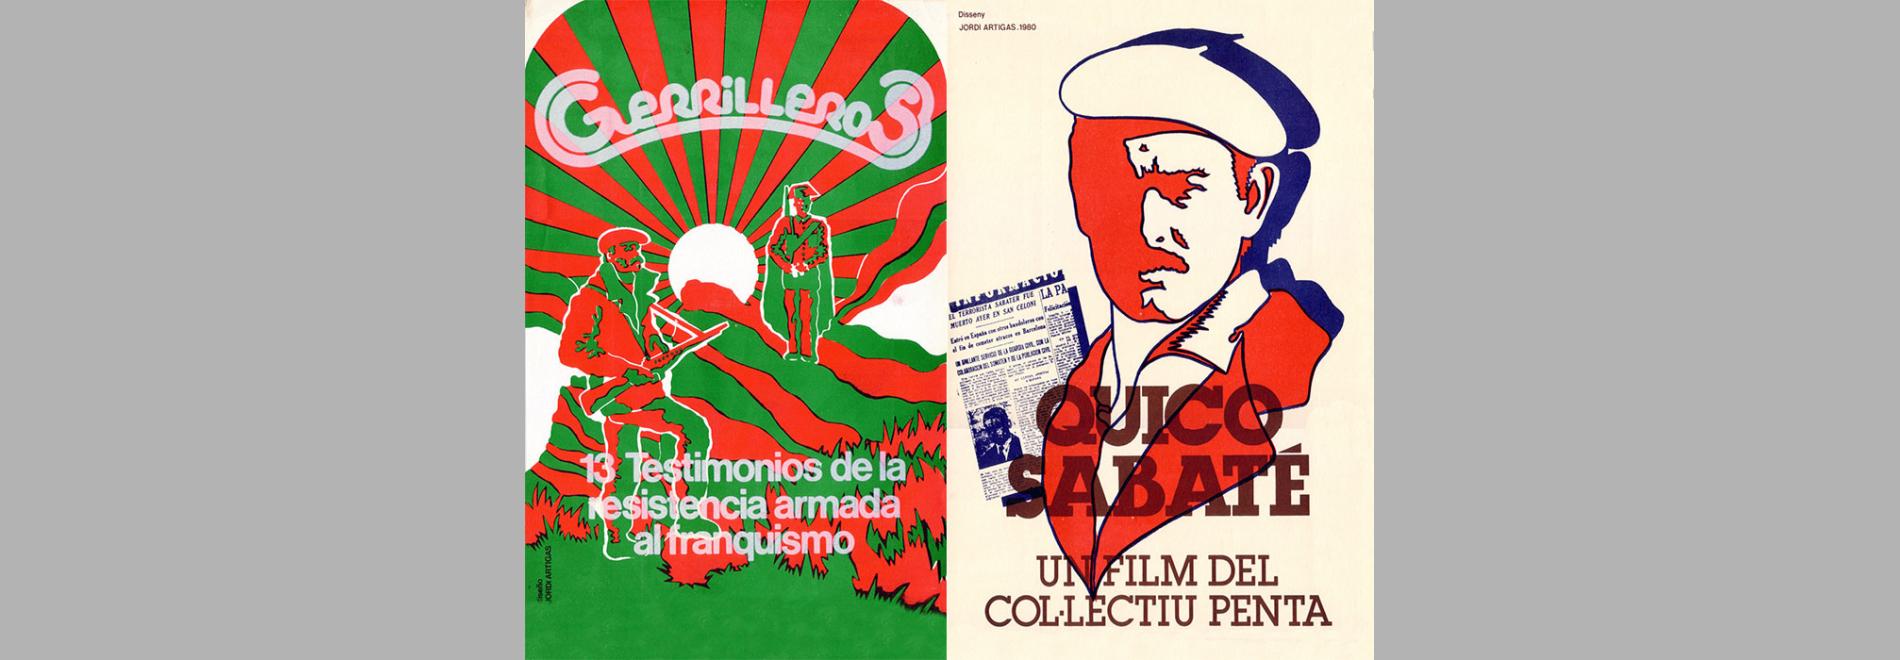 Cartells de 'Quico Sabaté' i 'Guerrilleros, 13 testimonios de la resistencia armada' 